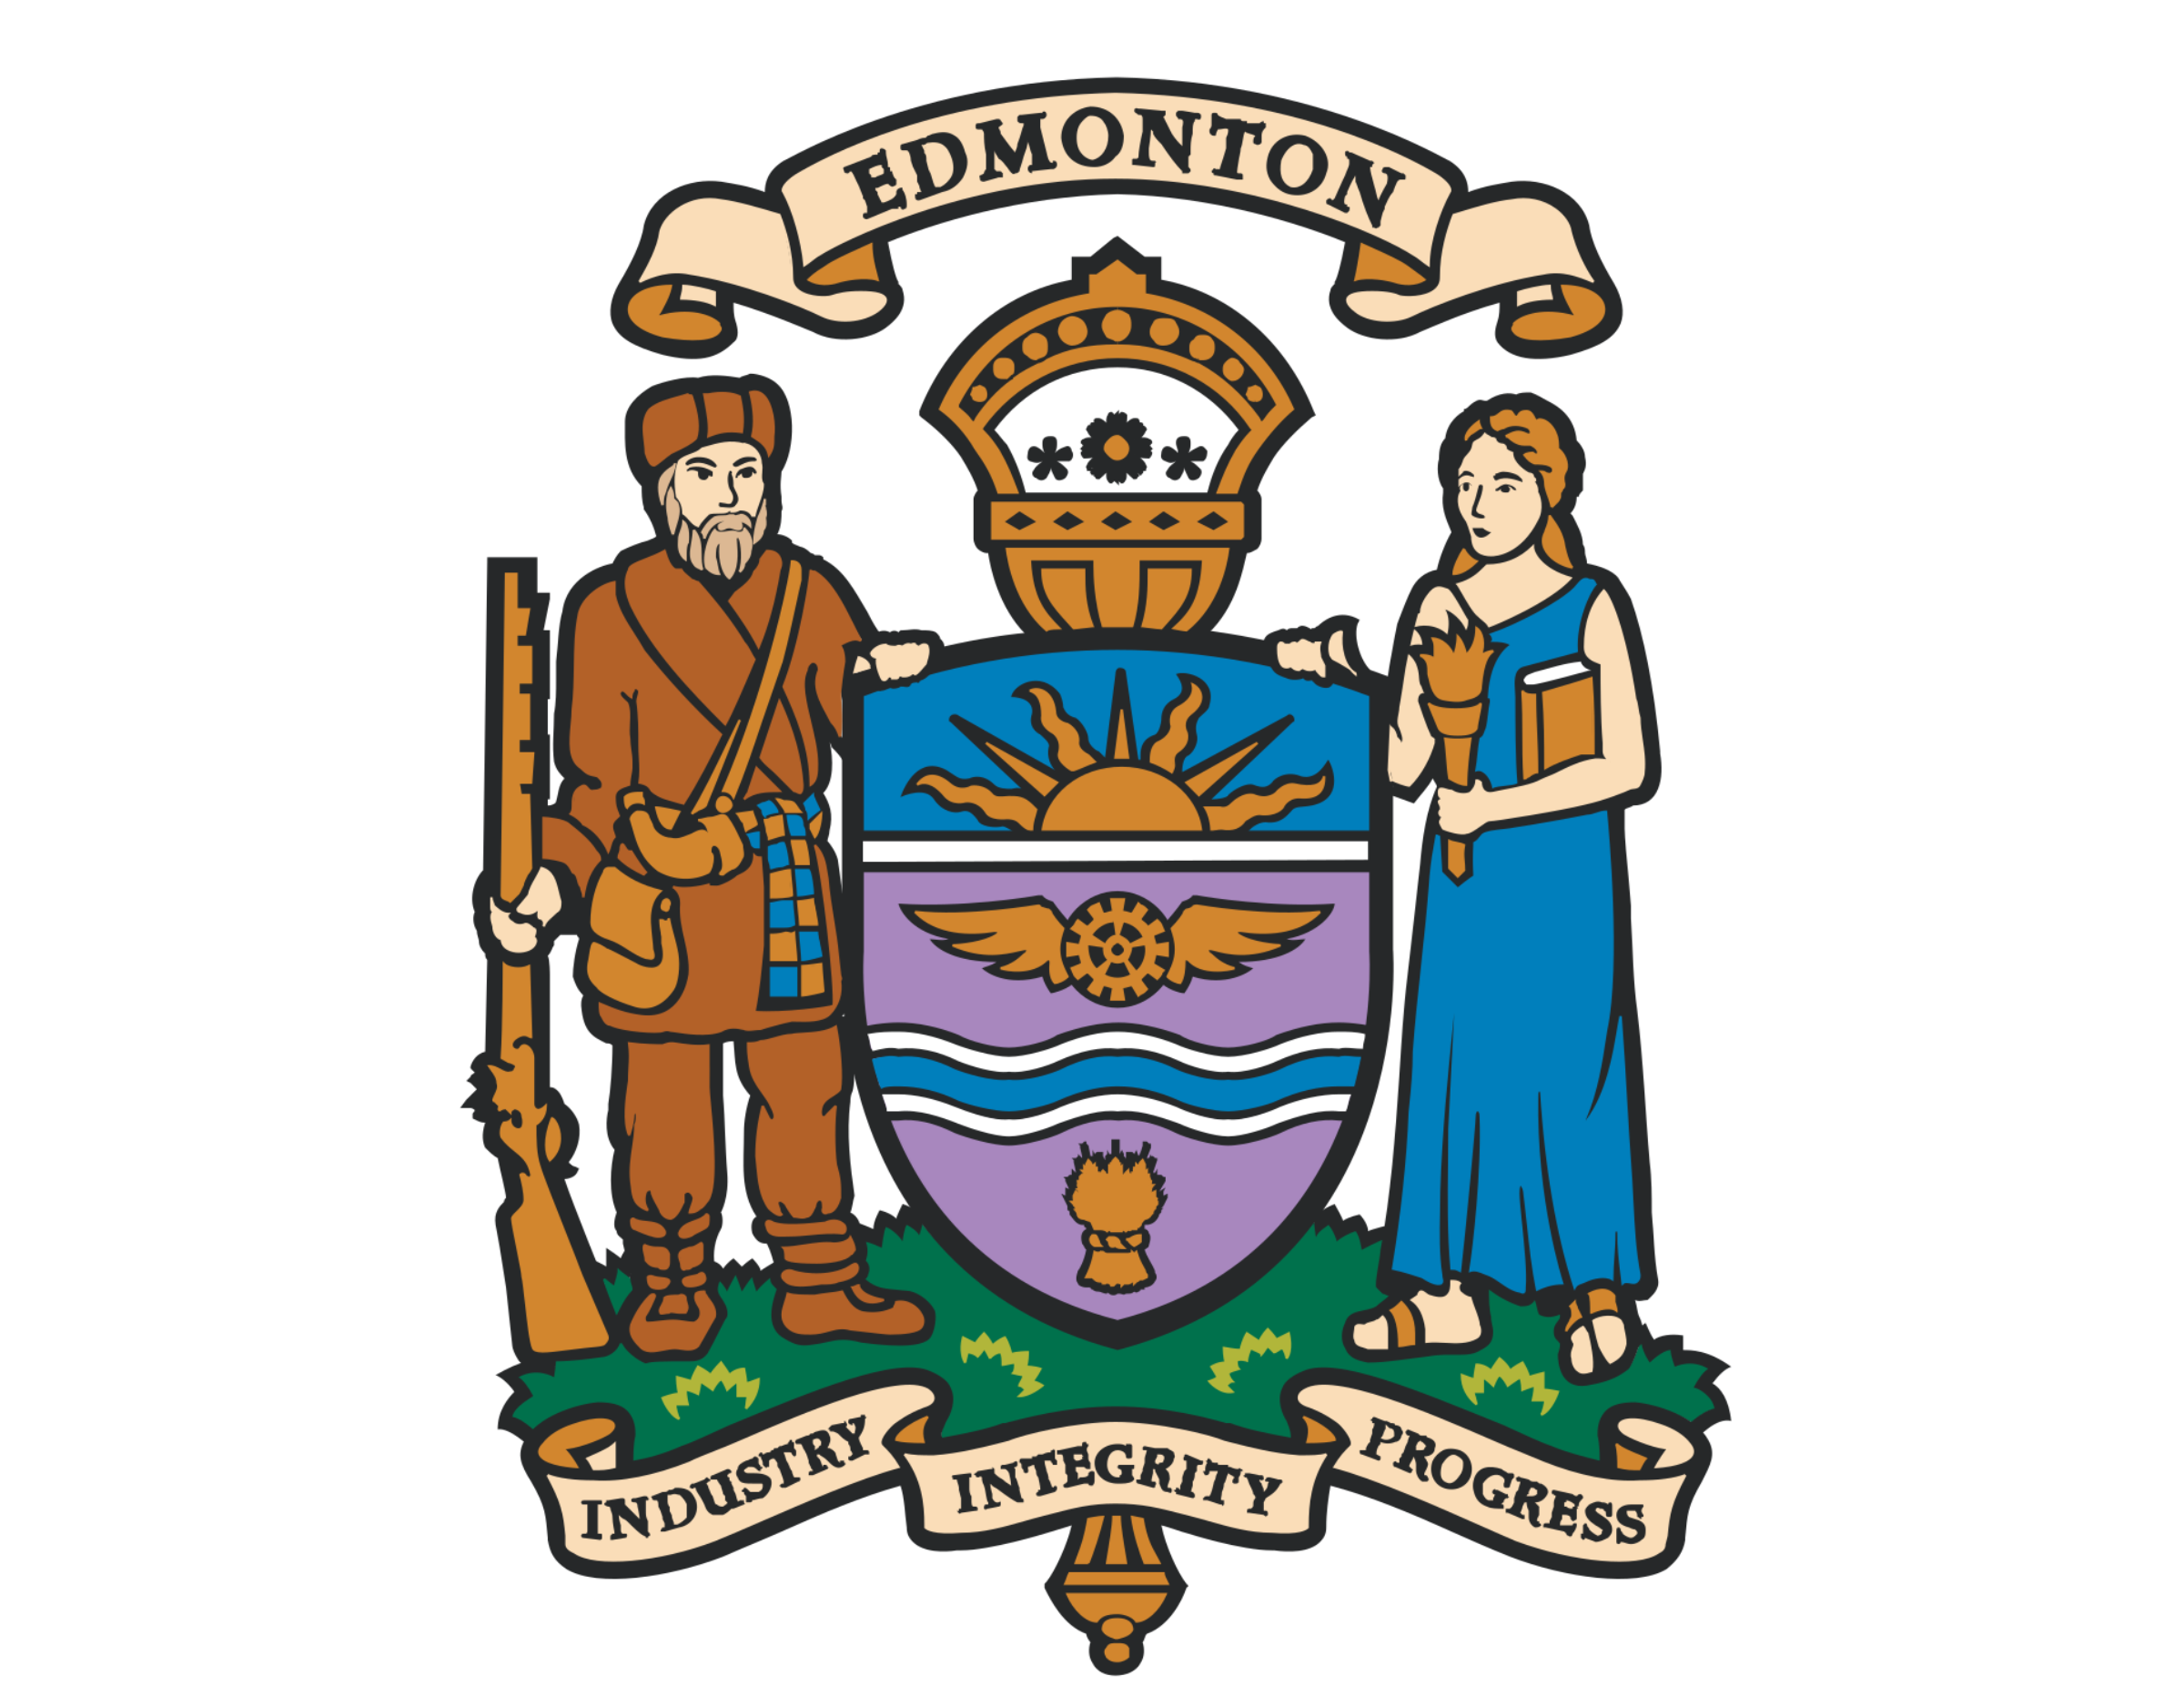 The flag of Edmonton, Canada